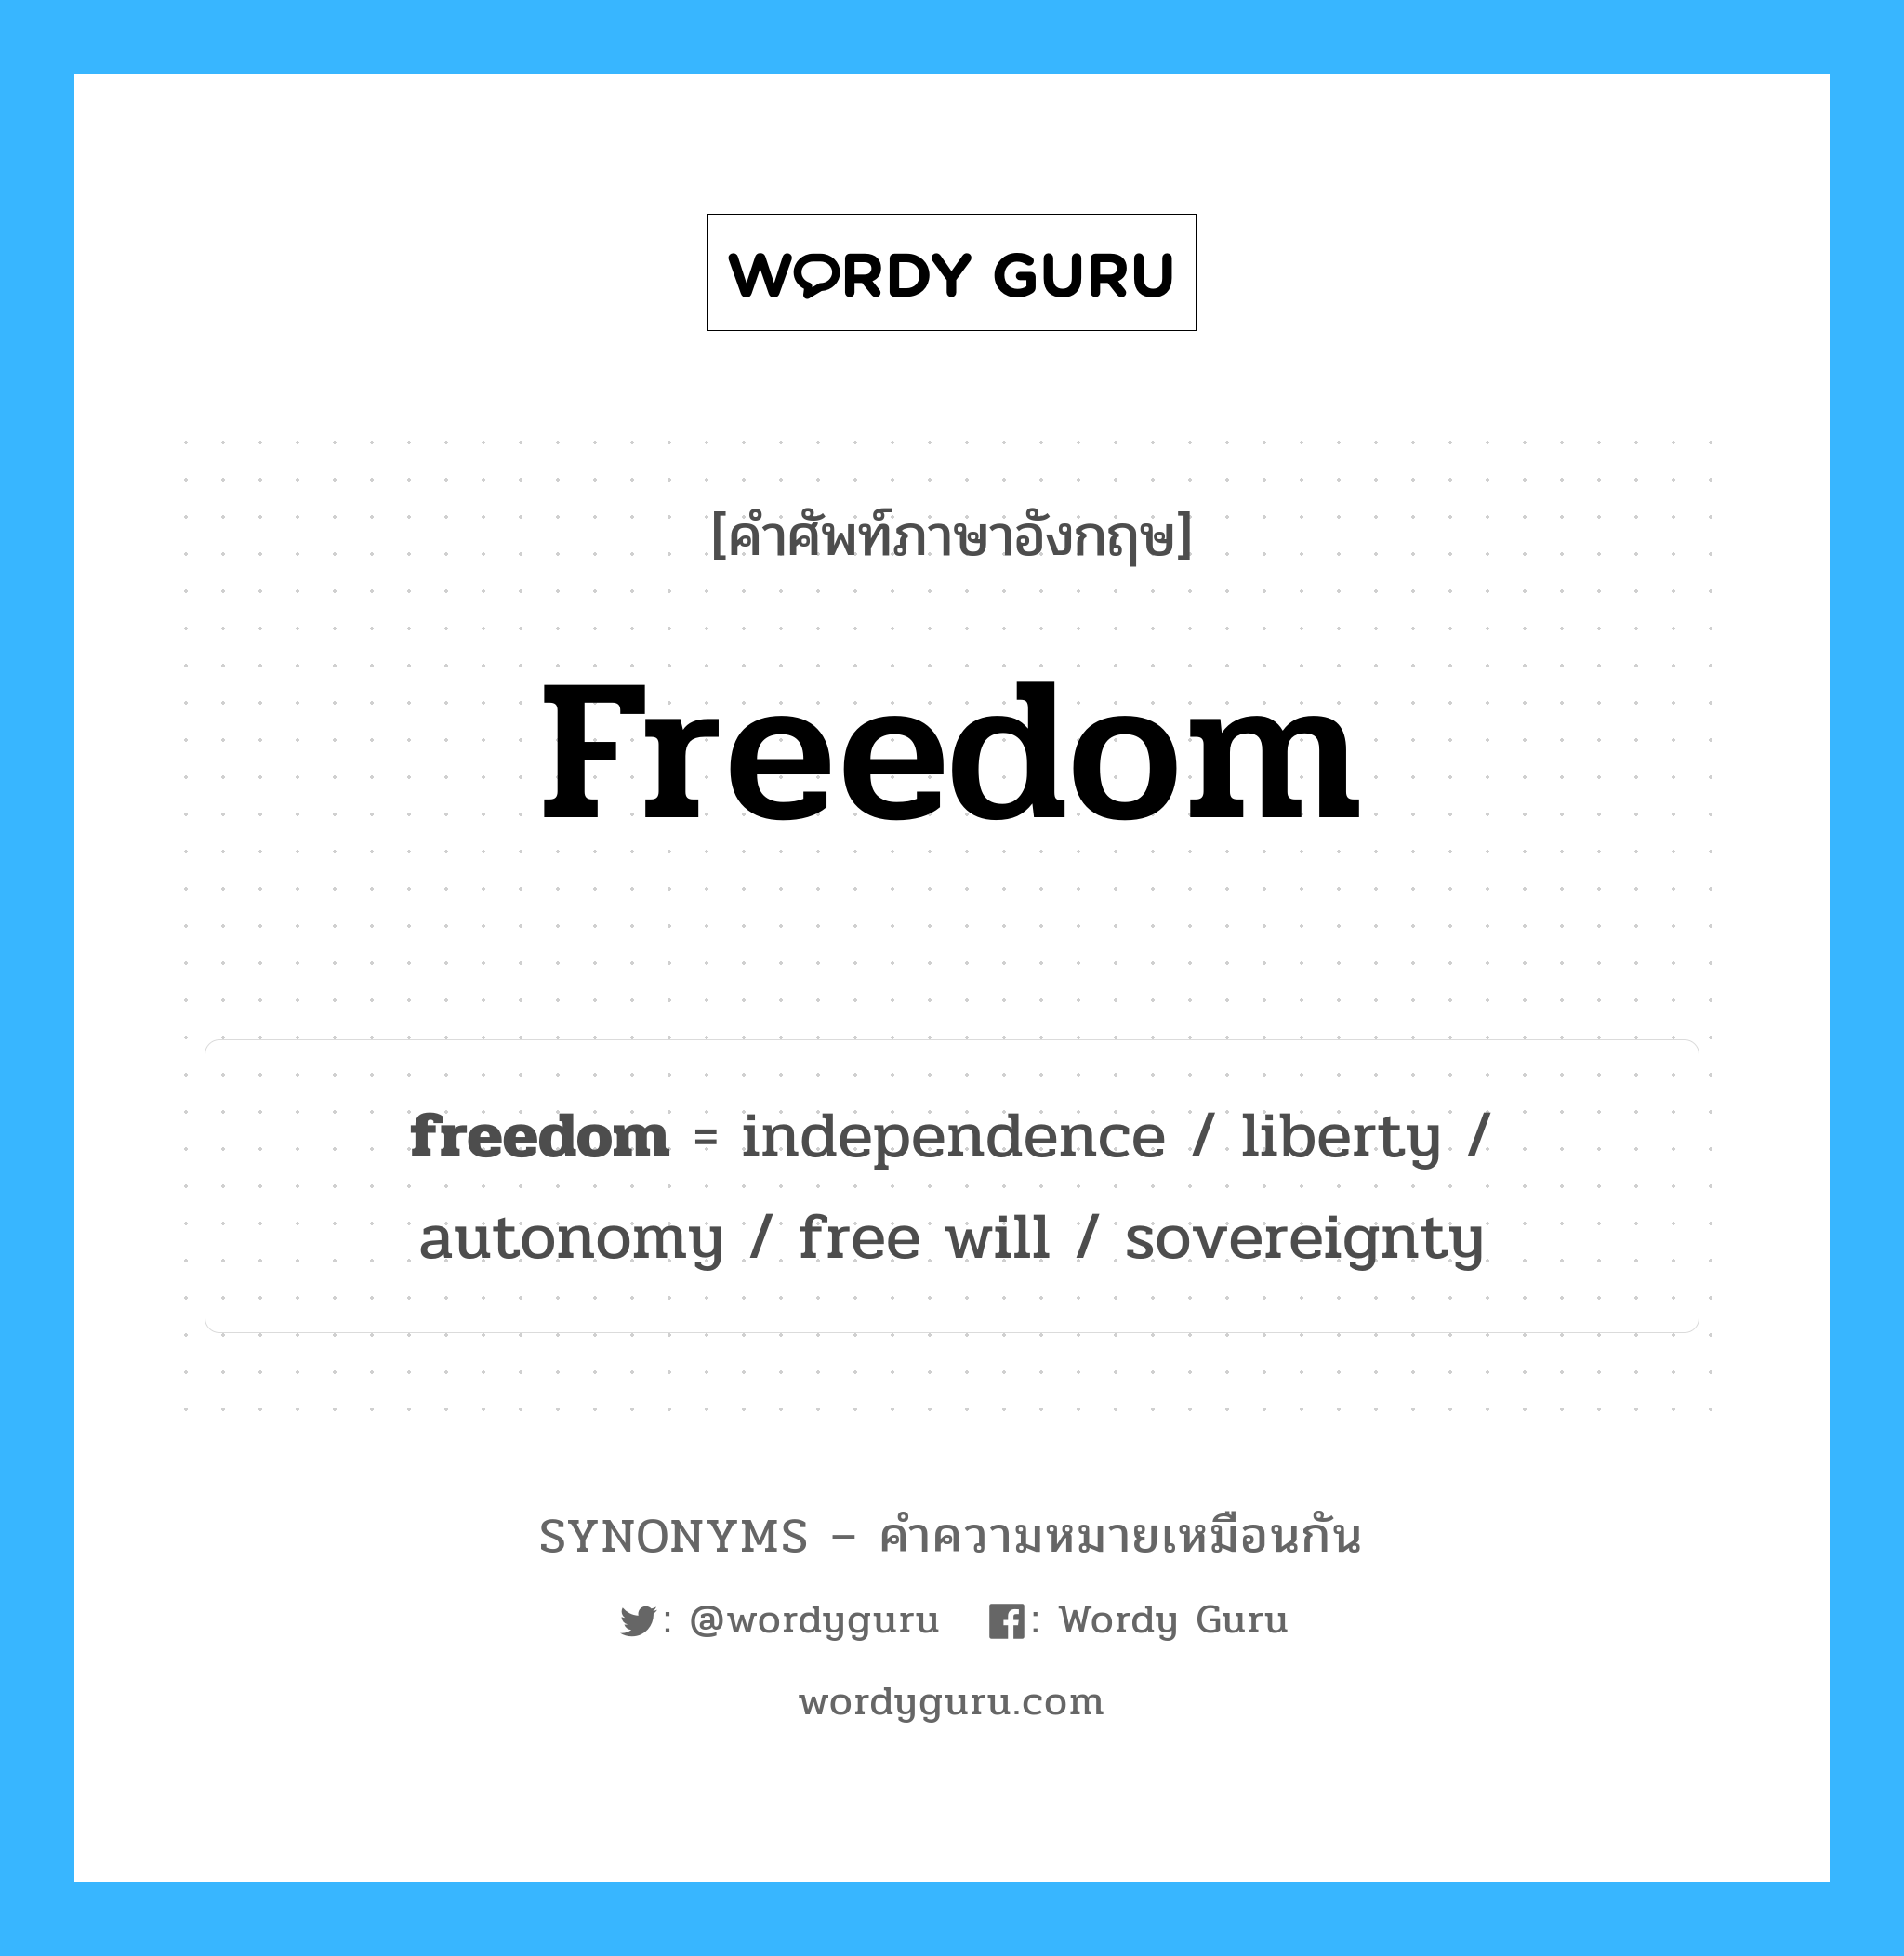 liberty เป็นหนึ่งใน freedom และมีคำอื่น ๆ อีกดังนี้, คำศัพท์ภาษาอังกฤษ liberty ความหมายคล้ายกันกับ freedom แปลว่า ลิเบอร์ตี้ หมวด freedom